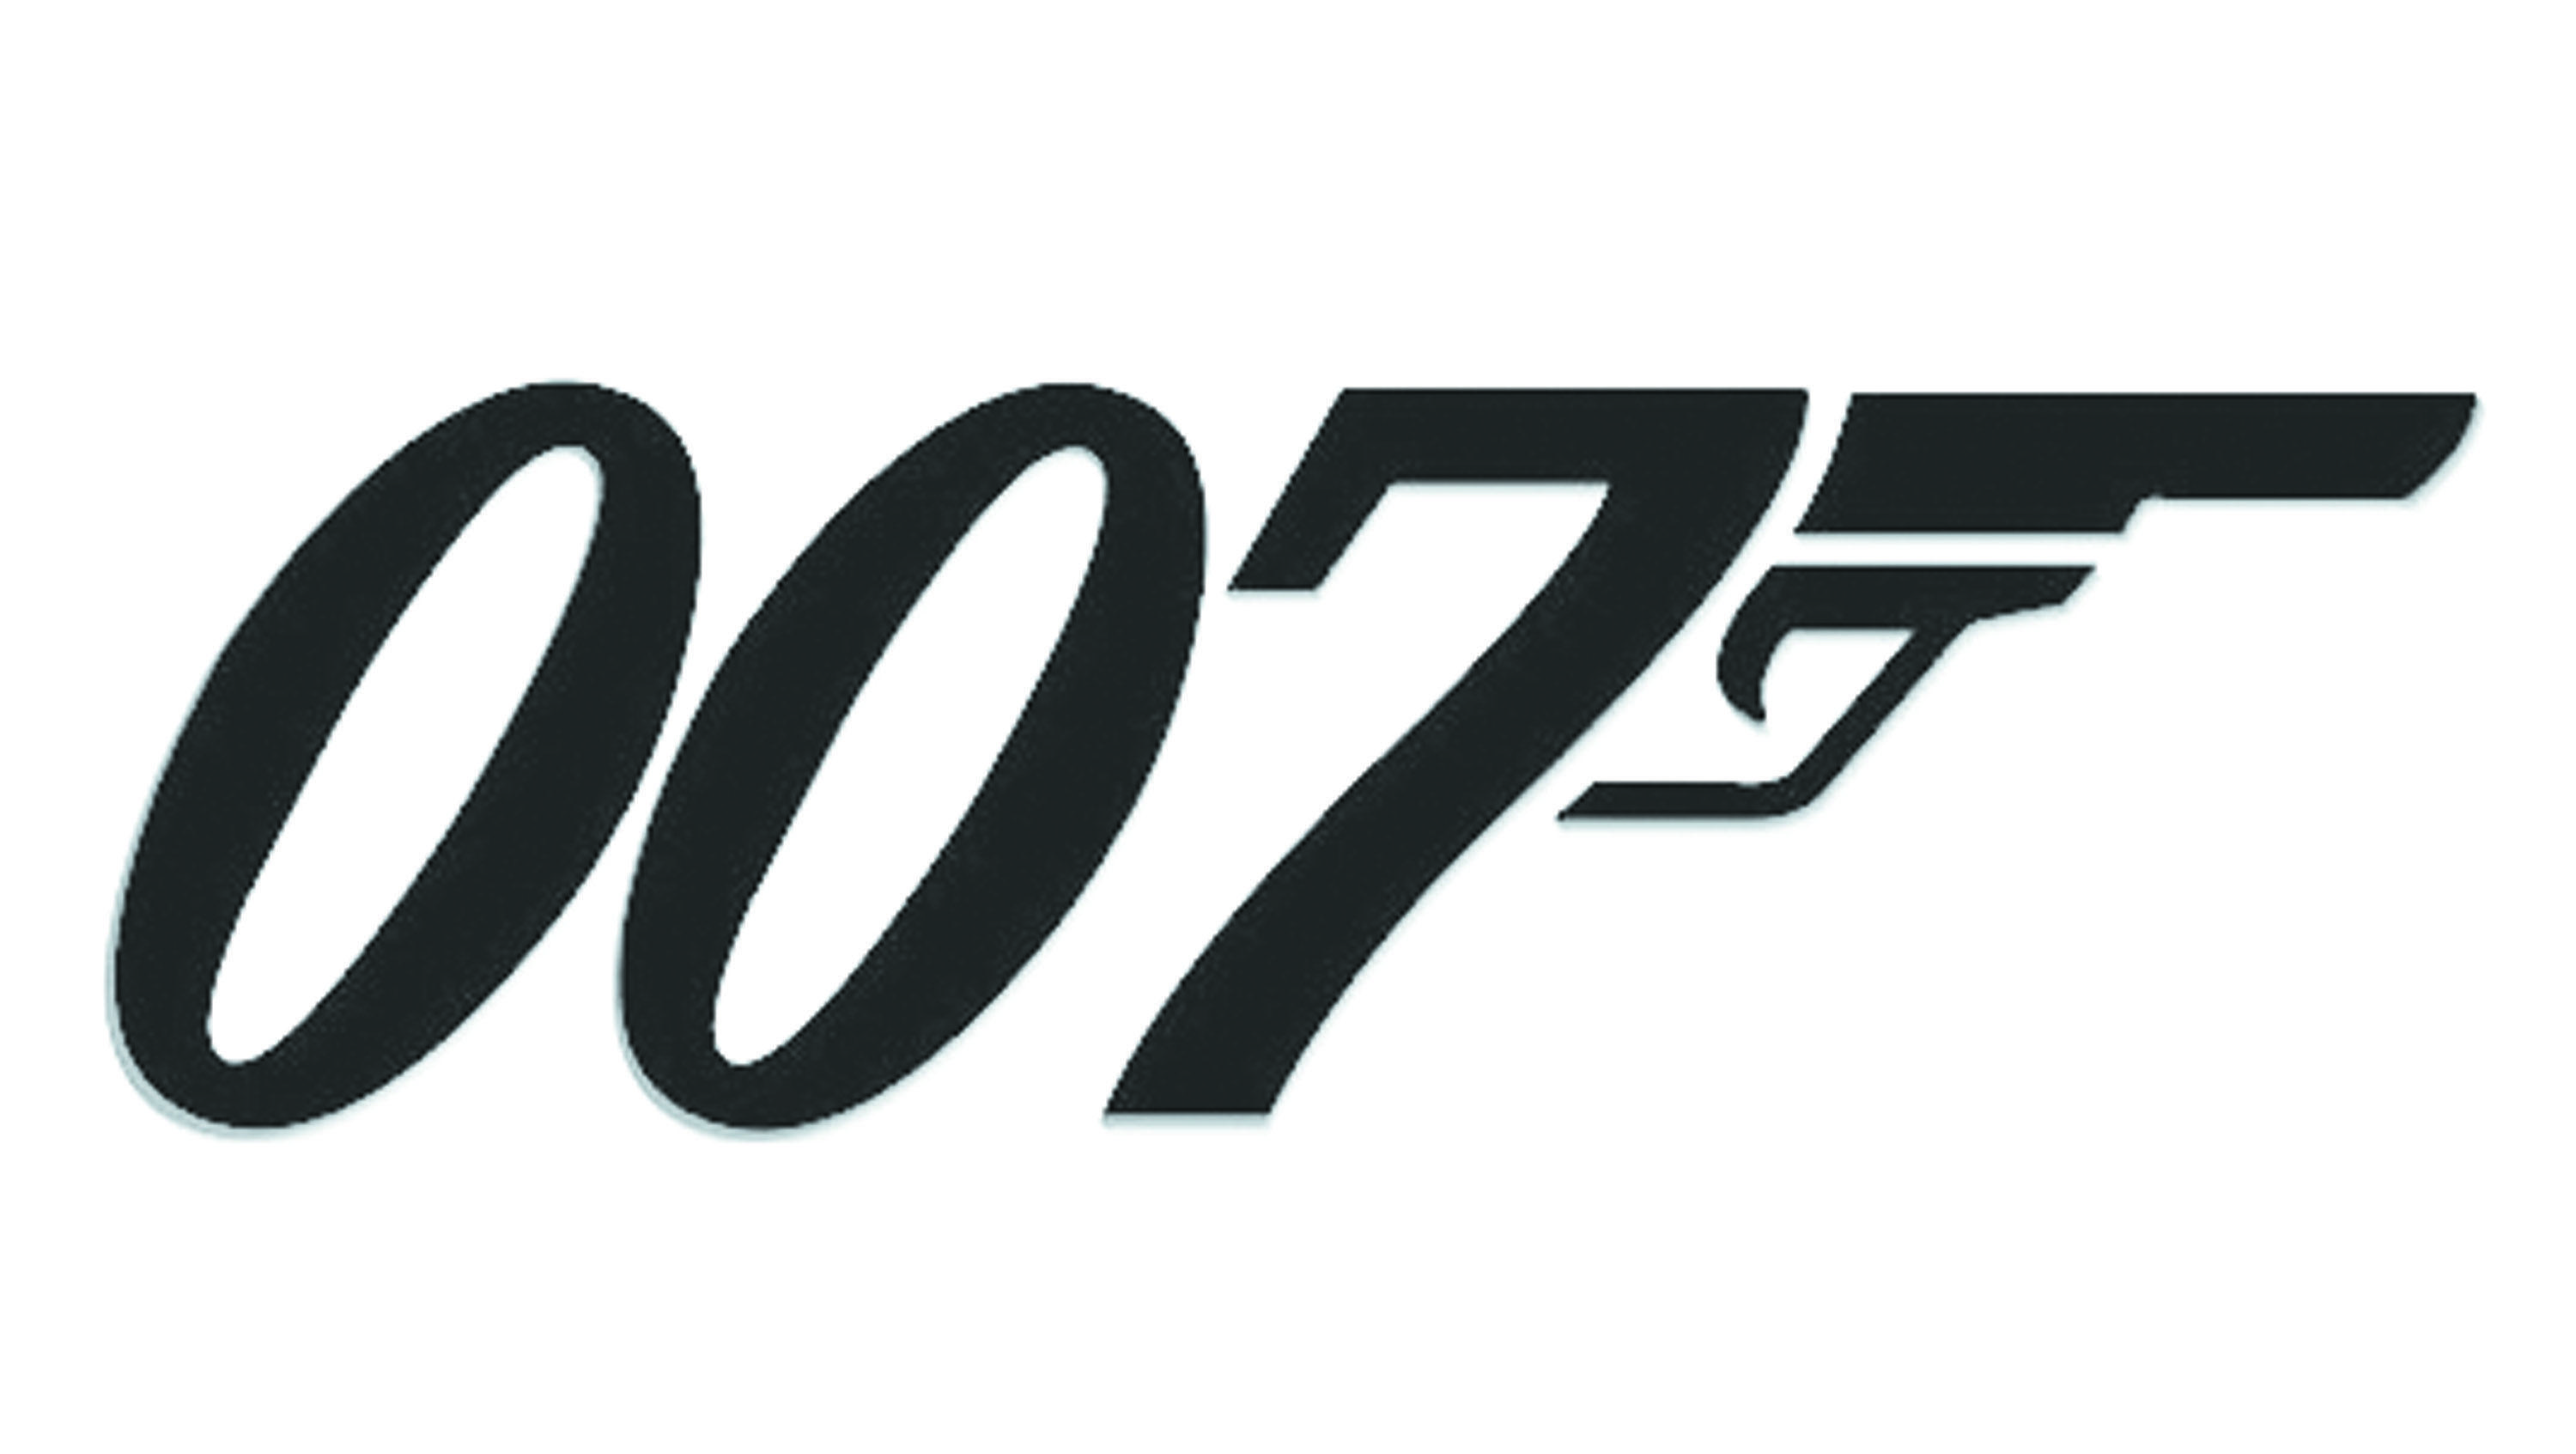 1995 Logo - The evolution of the 007 logo